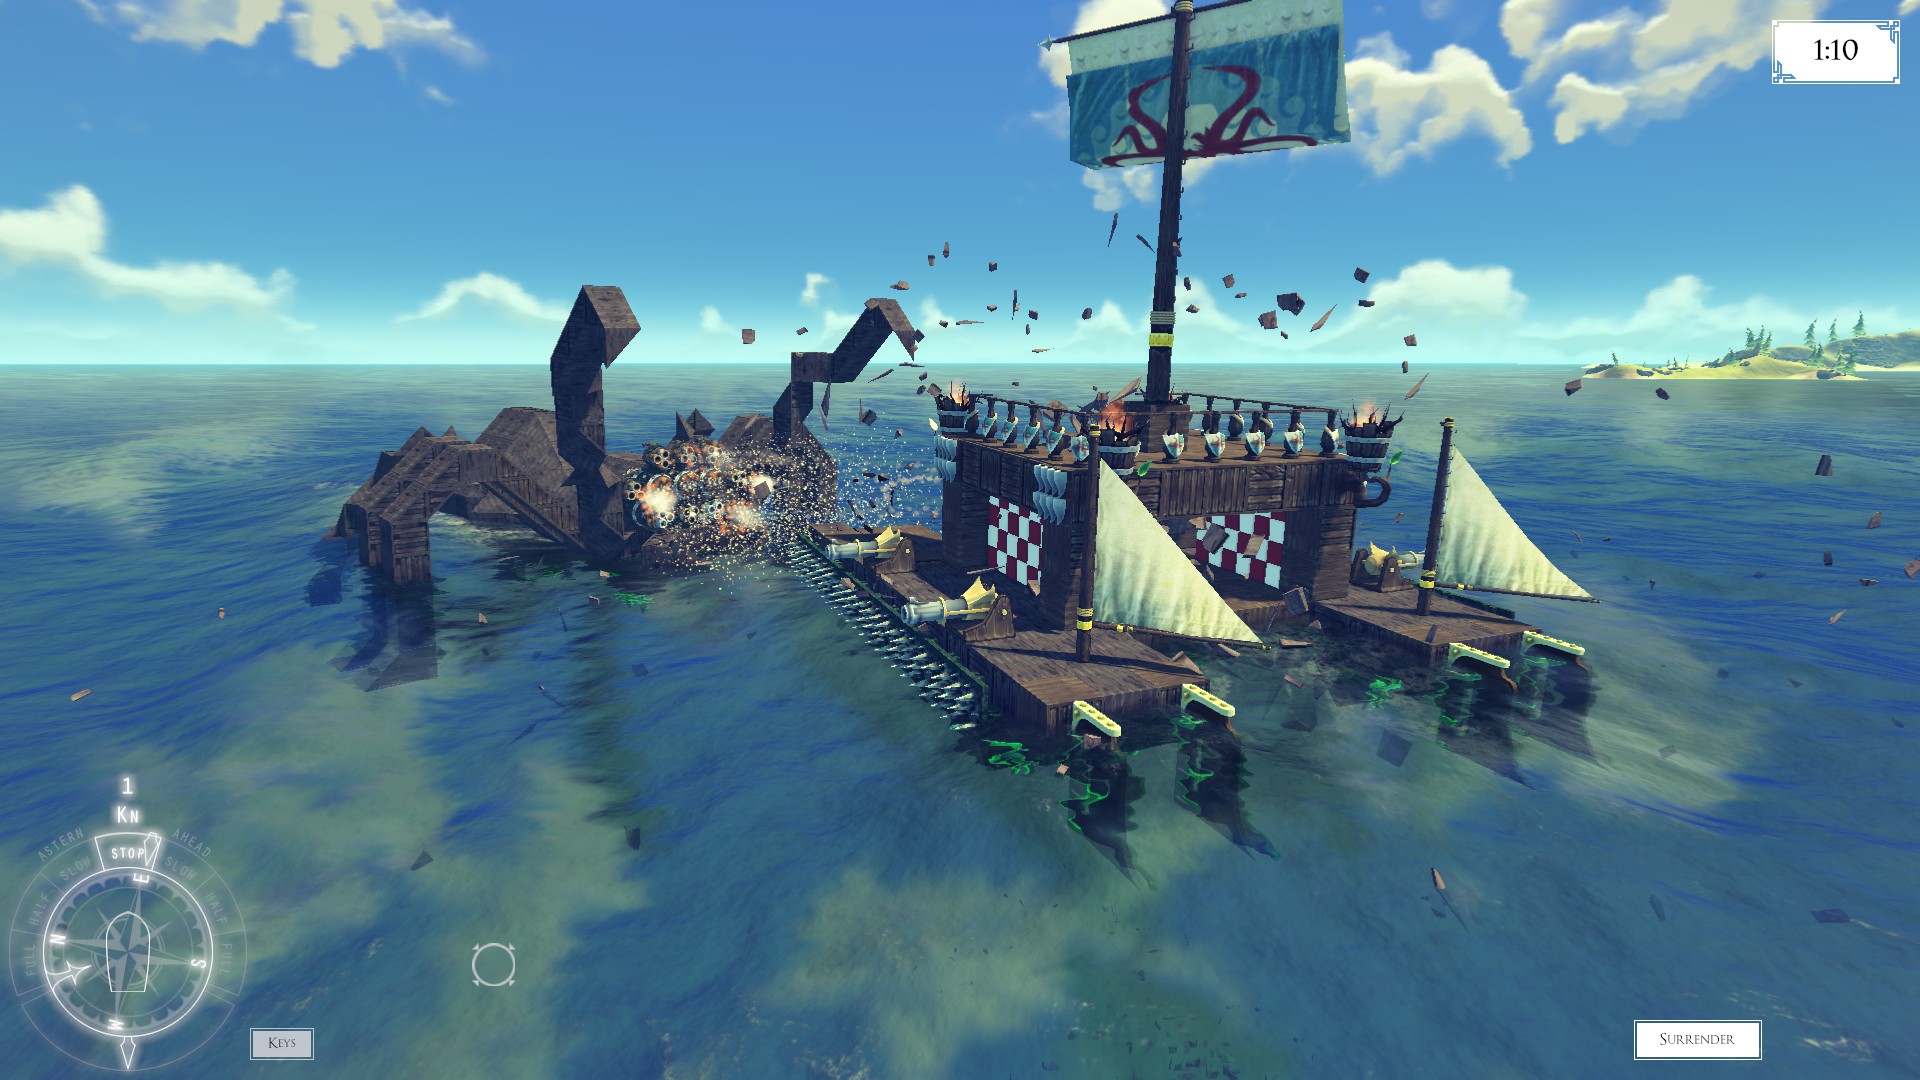 The Last Leviathan screenshot